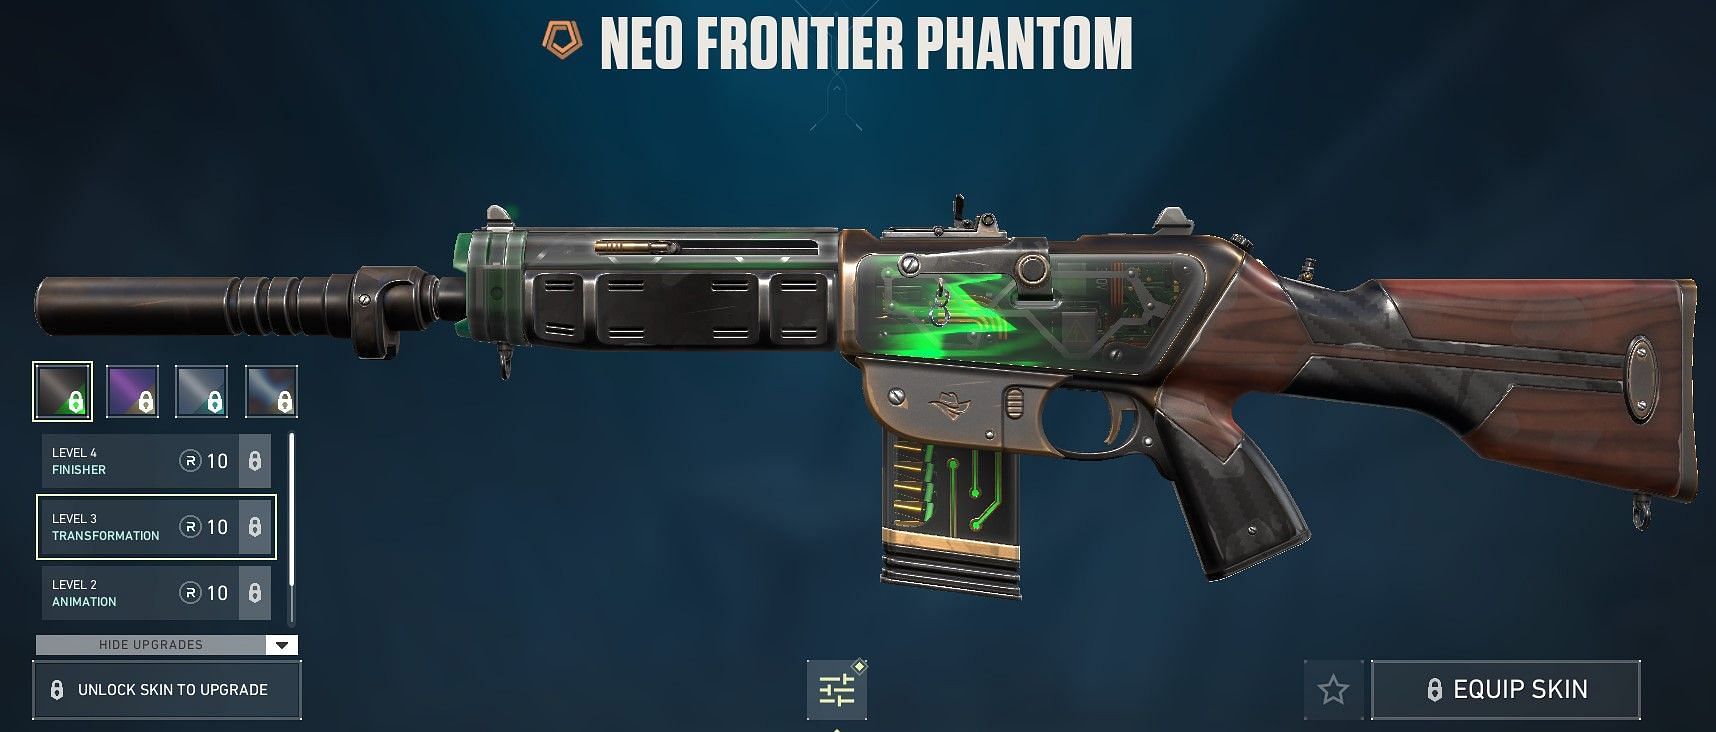 Neo Frontier Phantom (Image via Riot Games)